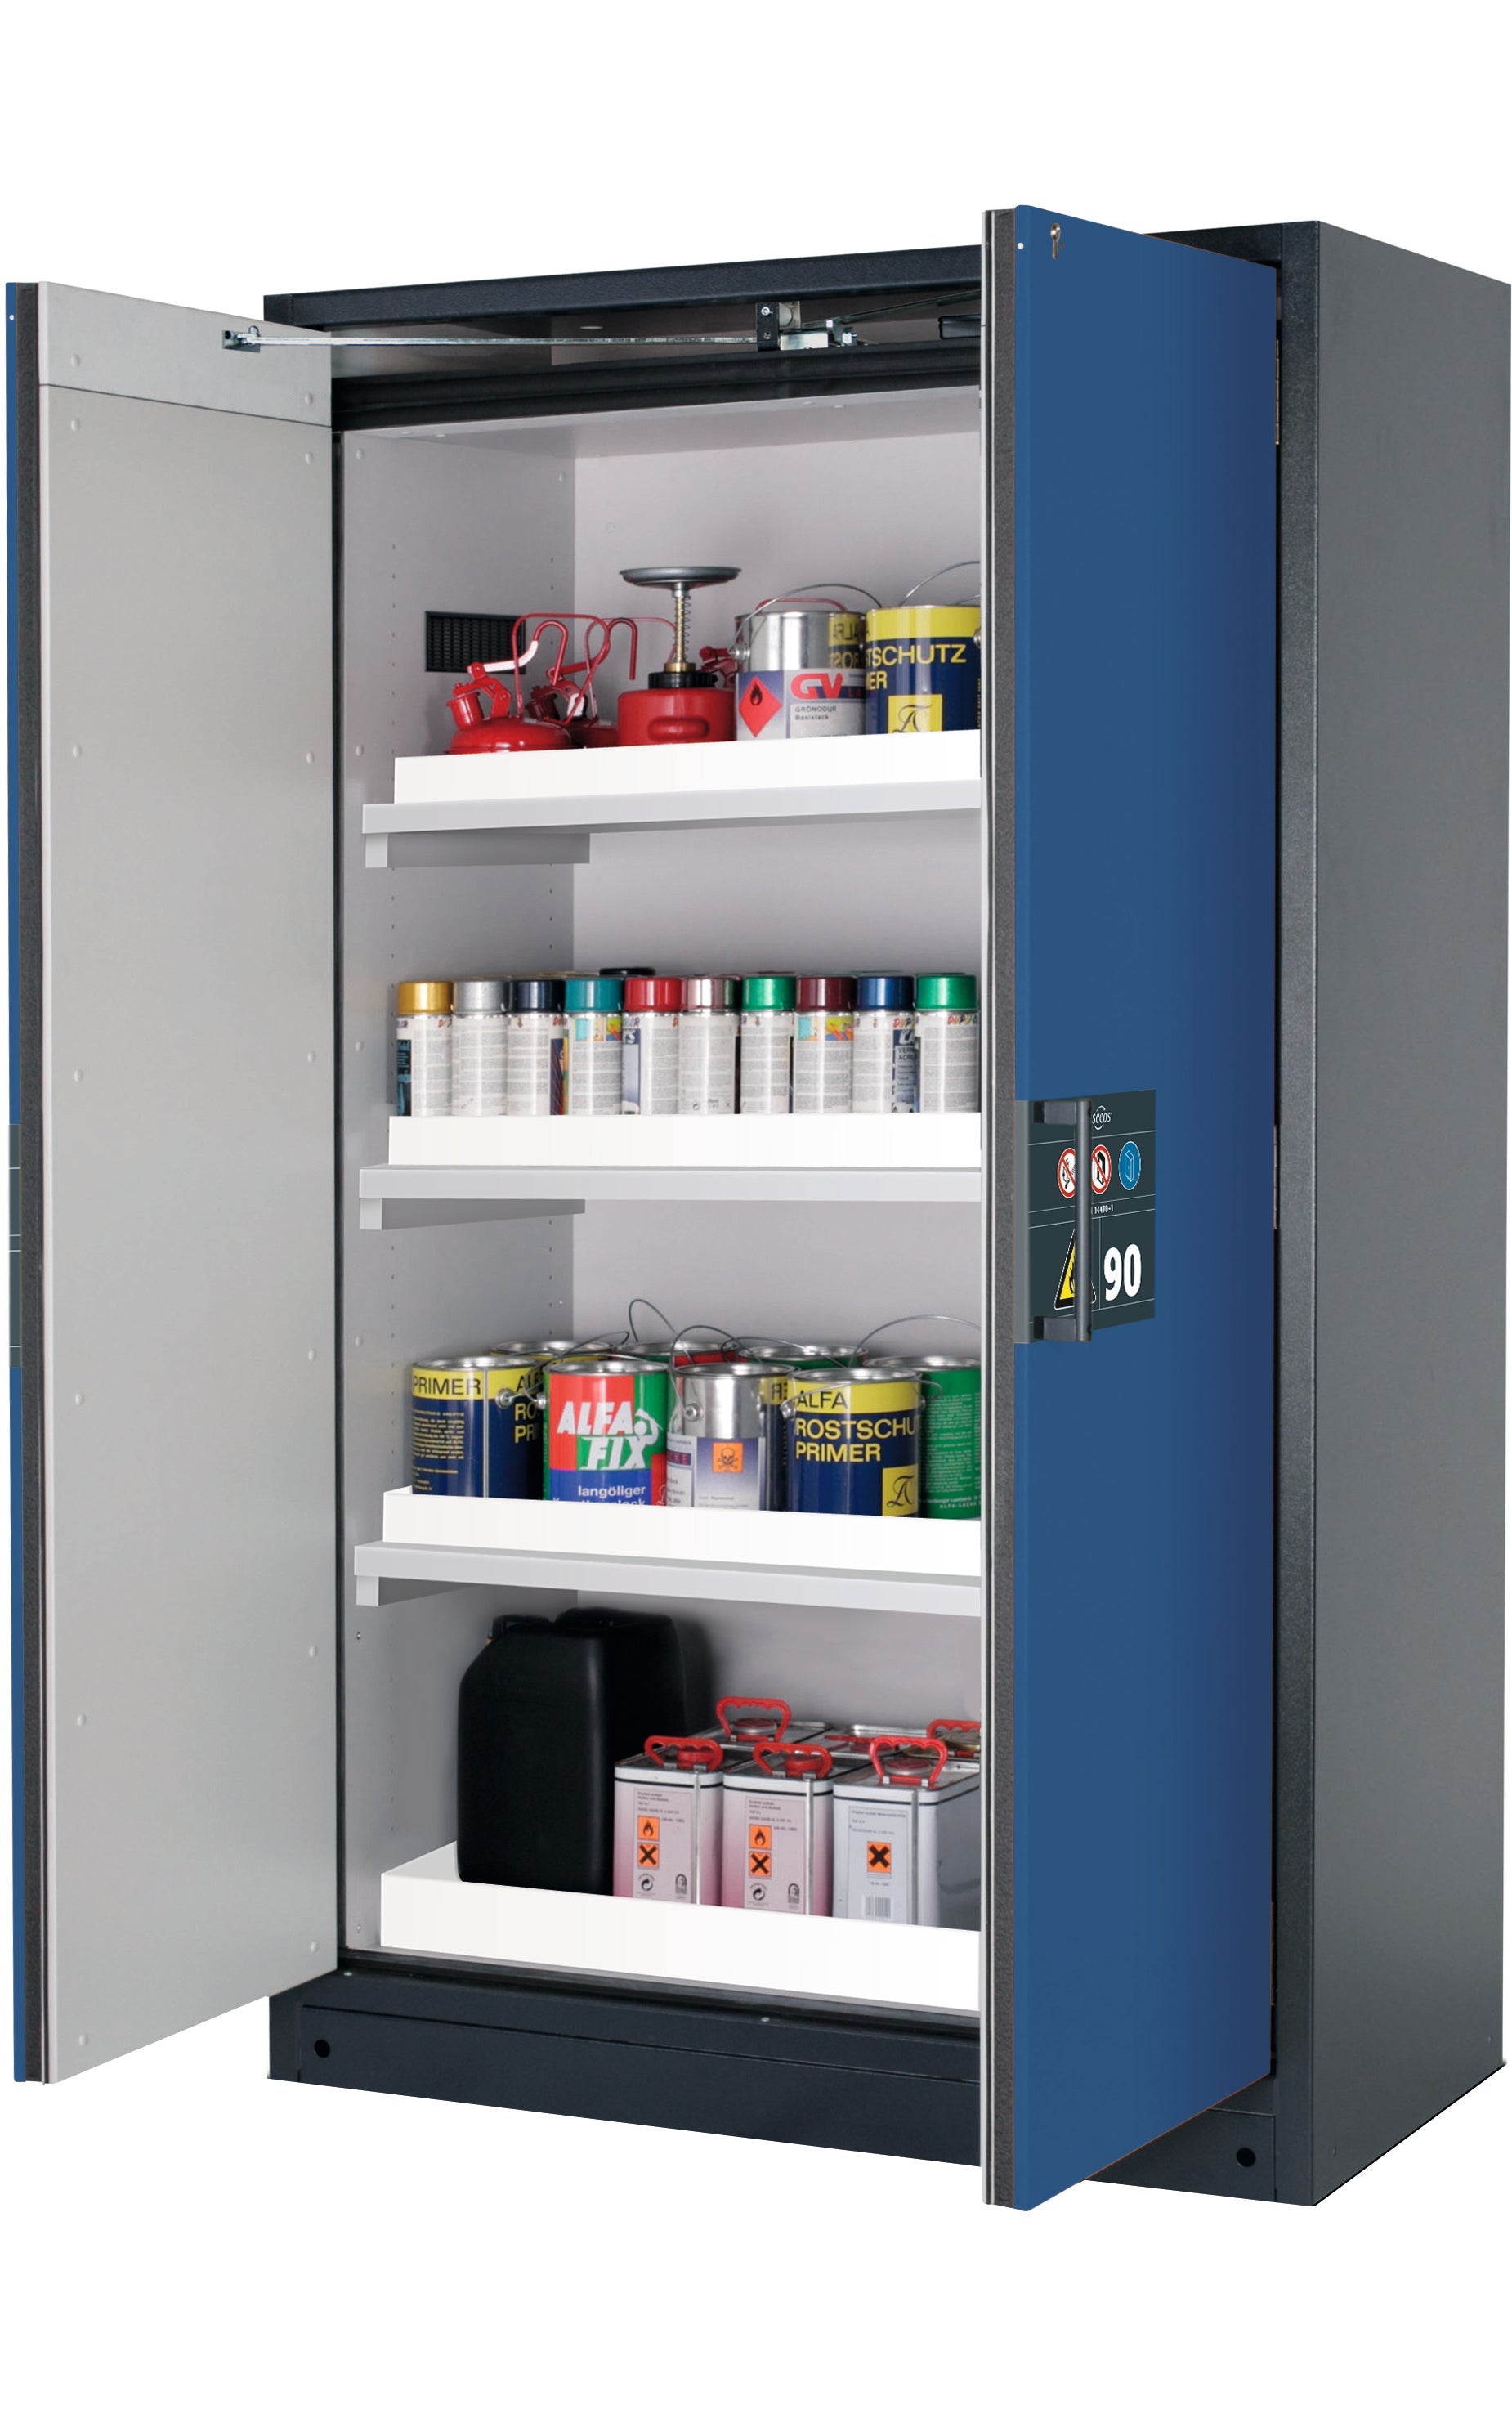 Type 90 safety storage cabinet Q-PEGASUS-90 model Q90.195.120.WDAC in gentian blue RAL 5010 with 3x tray shelf (standard) (polypropylene),